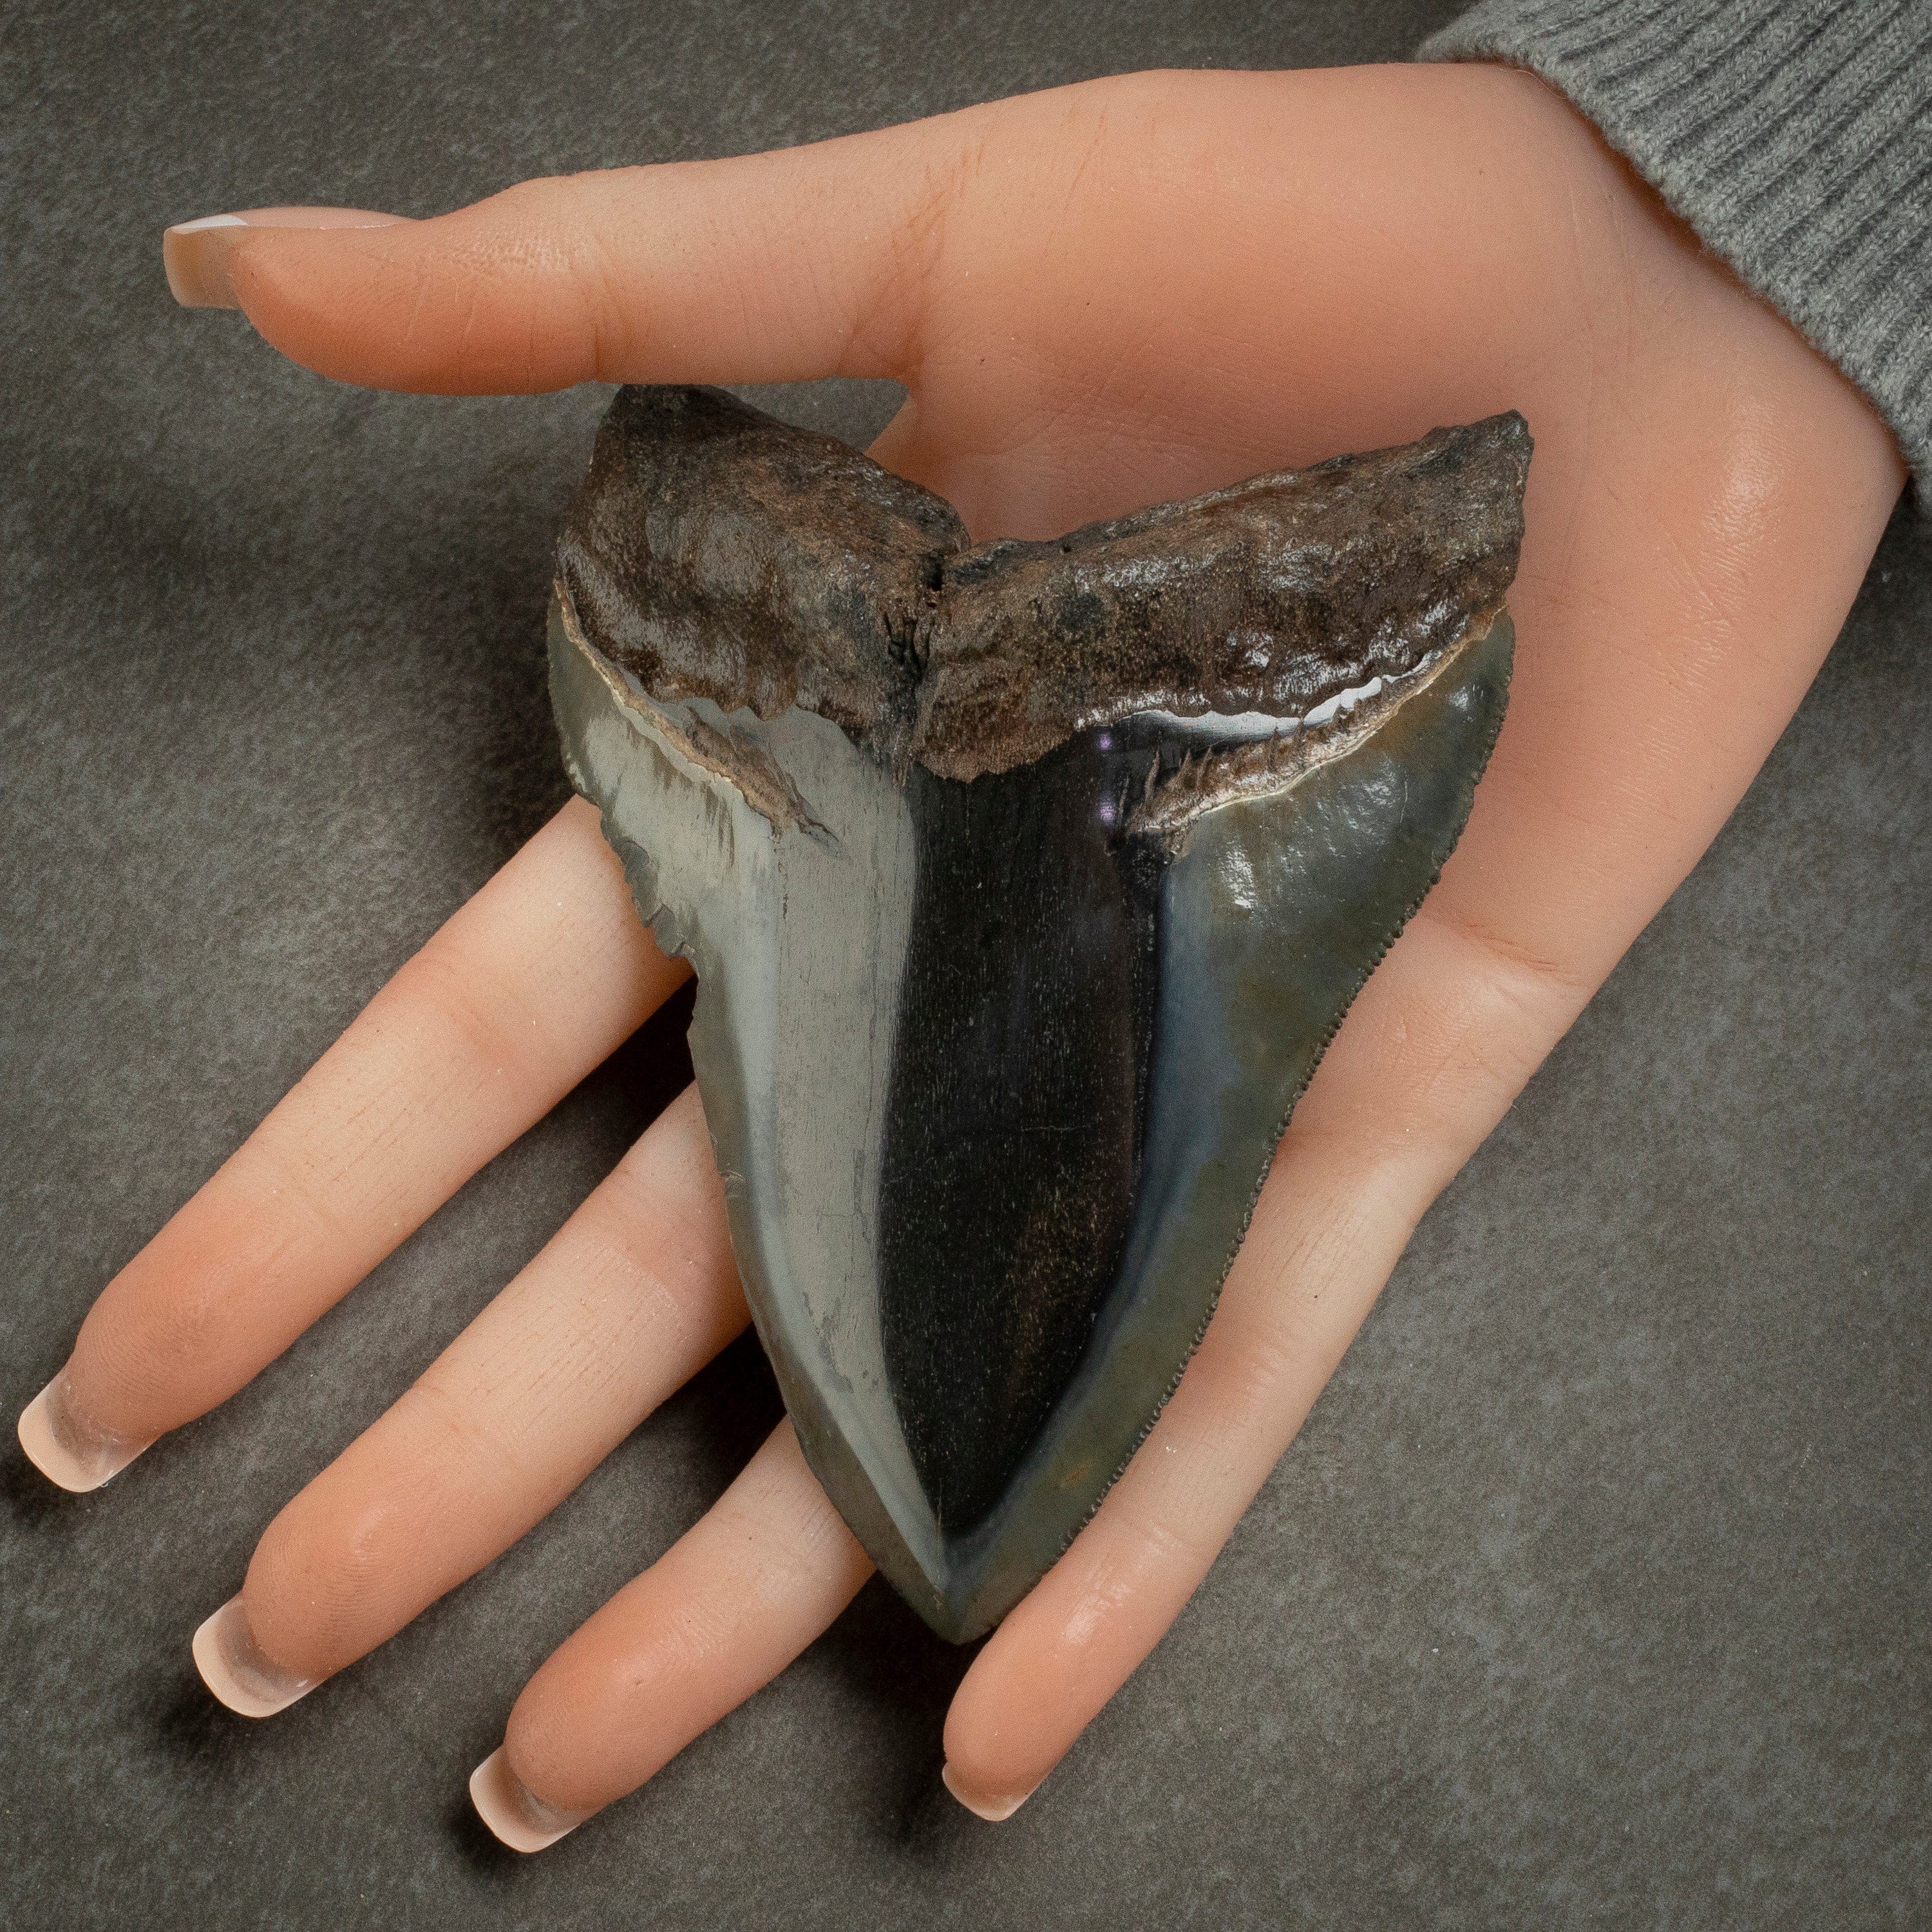 Kalifano Megalodon Teeth Megalodon Tooth from South Carolina - 4.2" ST2000.122